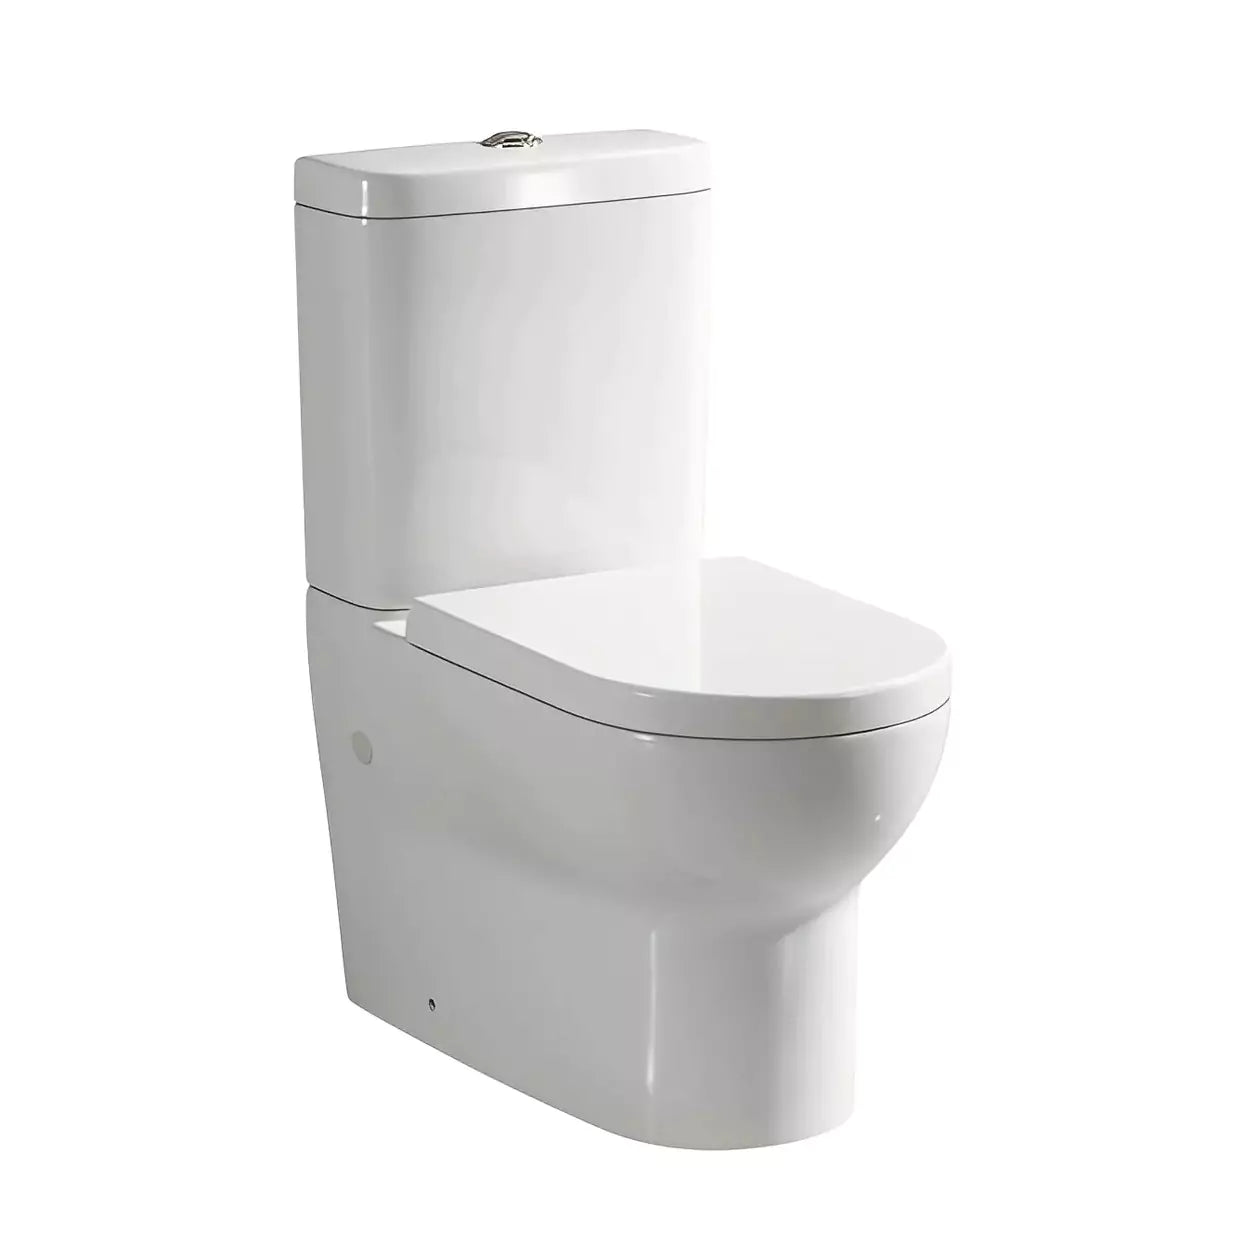 Polo Back To Wall Toilet Suite: Modern, Space-Saving Design-Gloss White-KDK005C/KDK005P